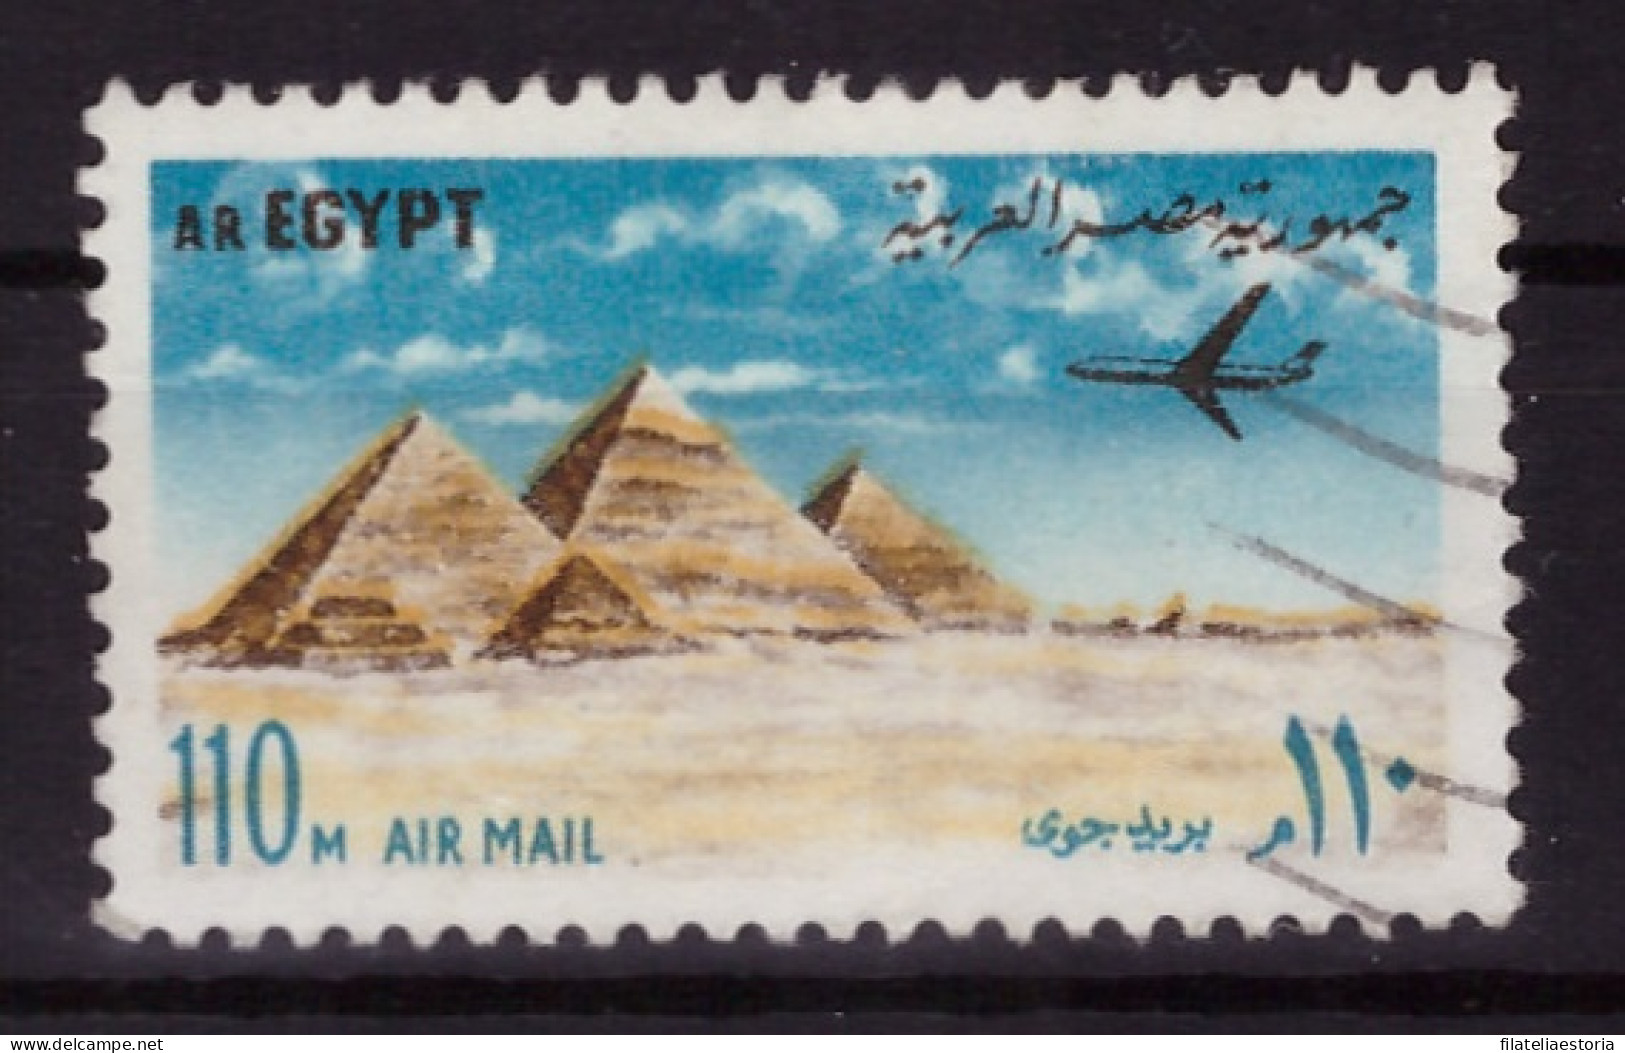 Egypte 1972 - Oblitéré - Monuments - Avions - Michel Nr. 1115 (egy350) - Gebraucht